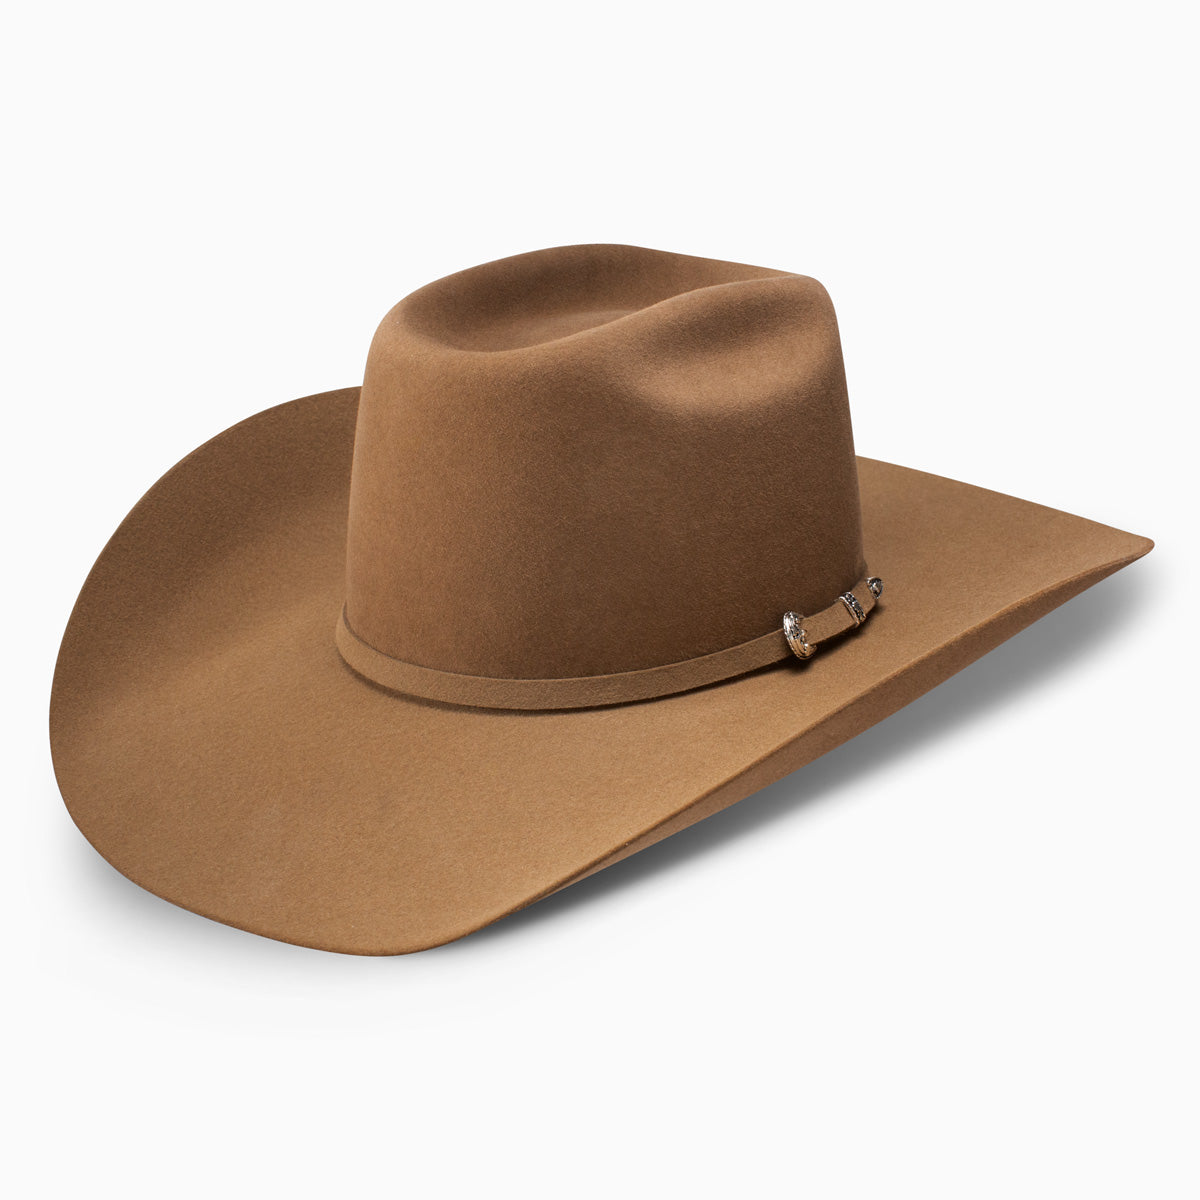 Western Hats - Resistol - Silver Sand - 7 1/4